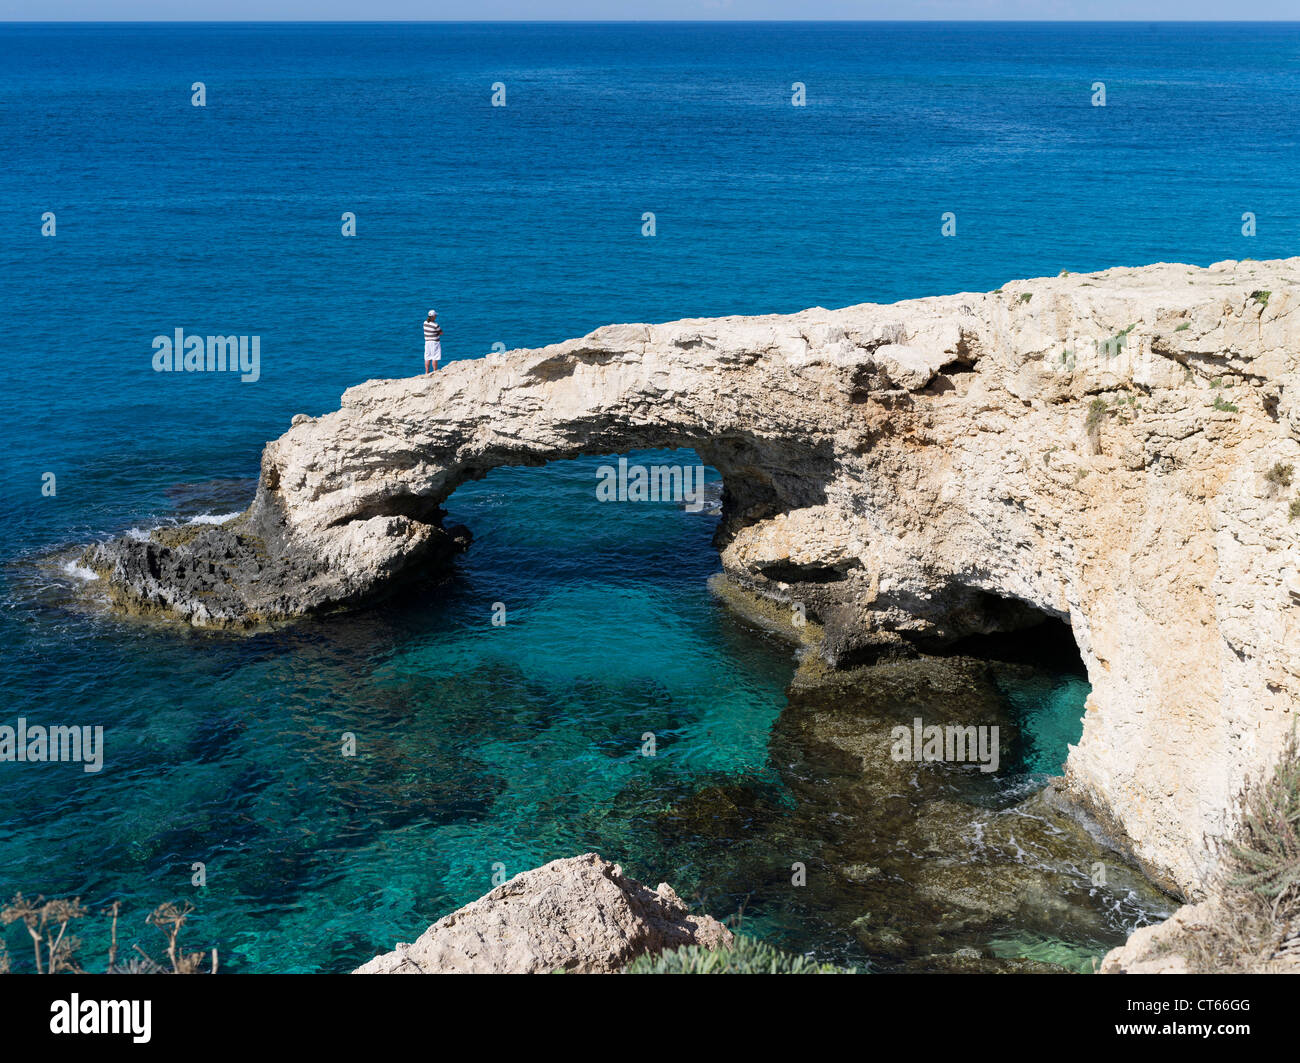 dh Greece island AYIA NAPA SOUTH CYPRUS Russian tourist man on sea arch clear blue sea coastal rocks cave people Stock Photo